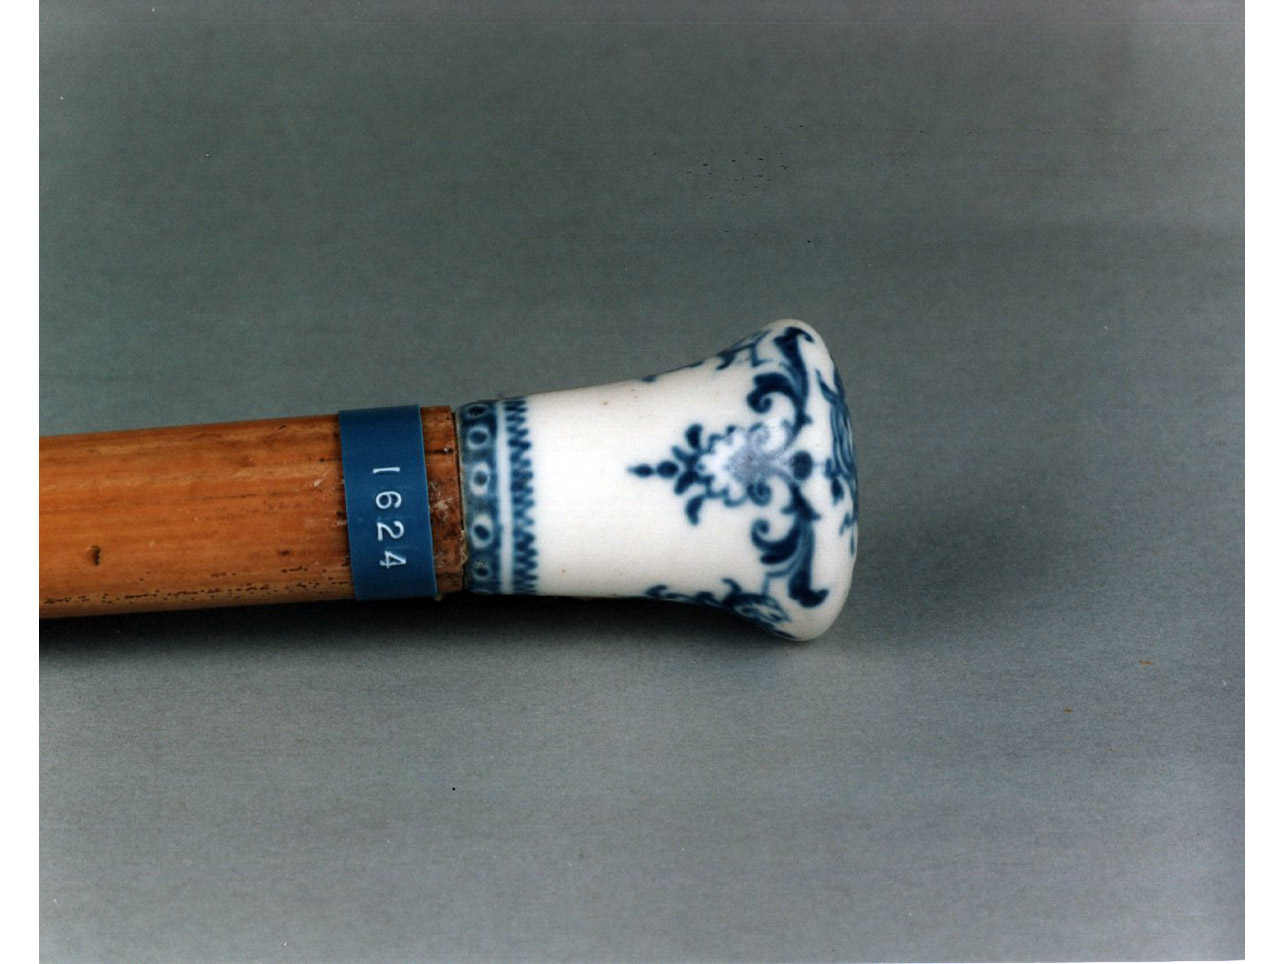 motivi decorativi vegetali stilizzati (bastone) - manifattura francese (primo quarto sec. XVIII)